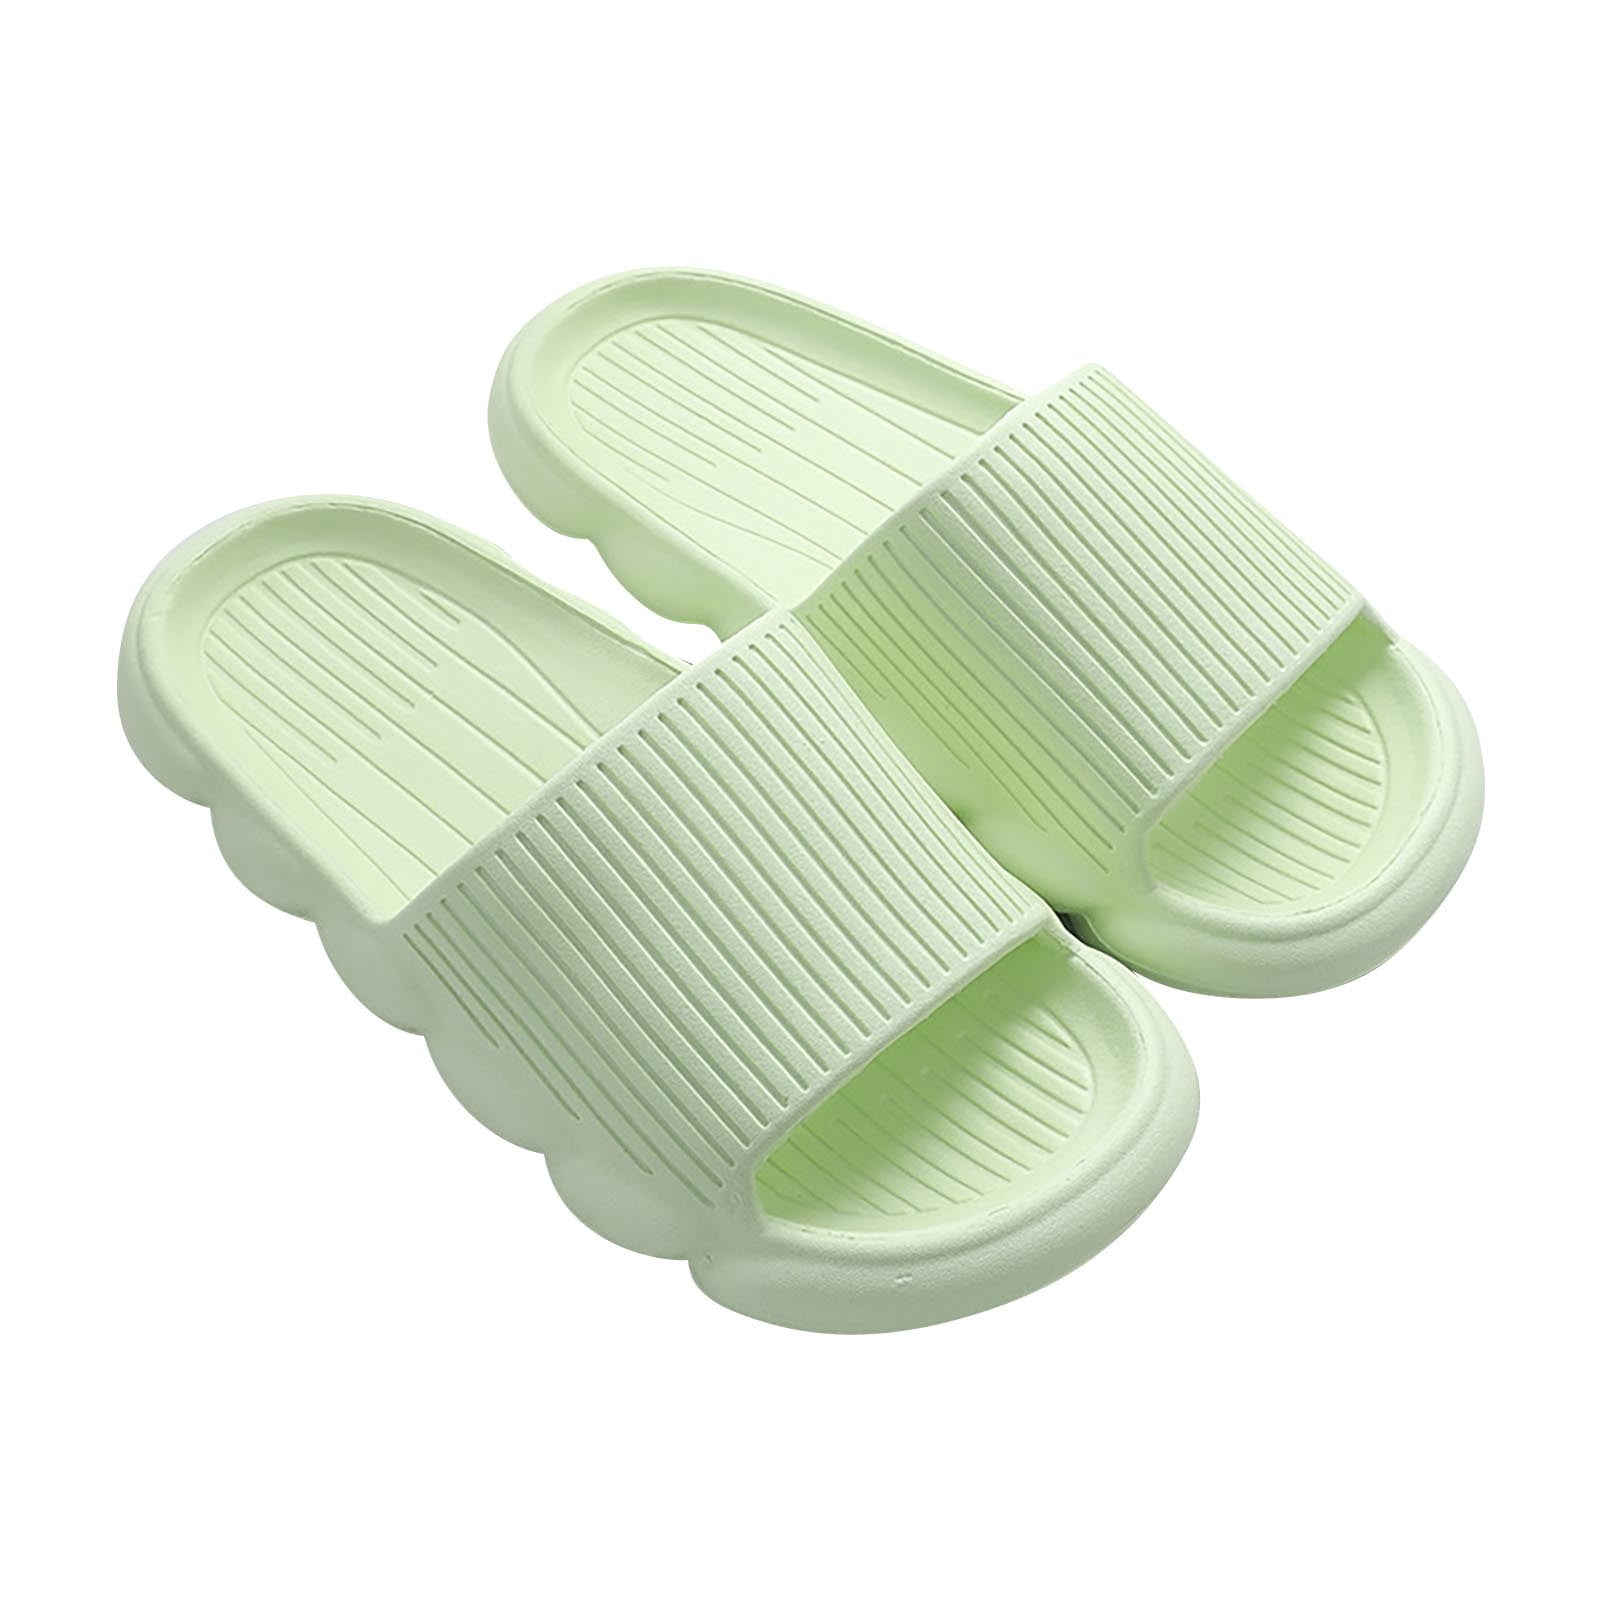 Utoimkio Clearance Slide Sandals for Women Slip On Summer Casual Beach ...